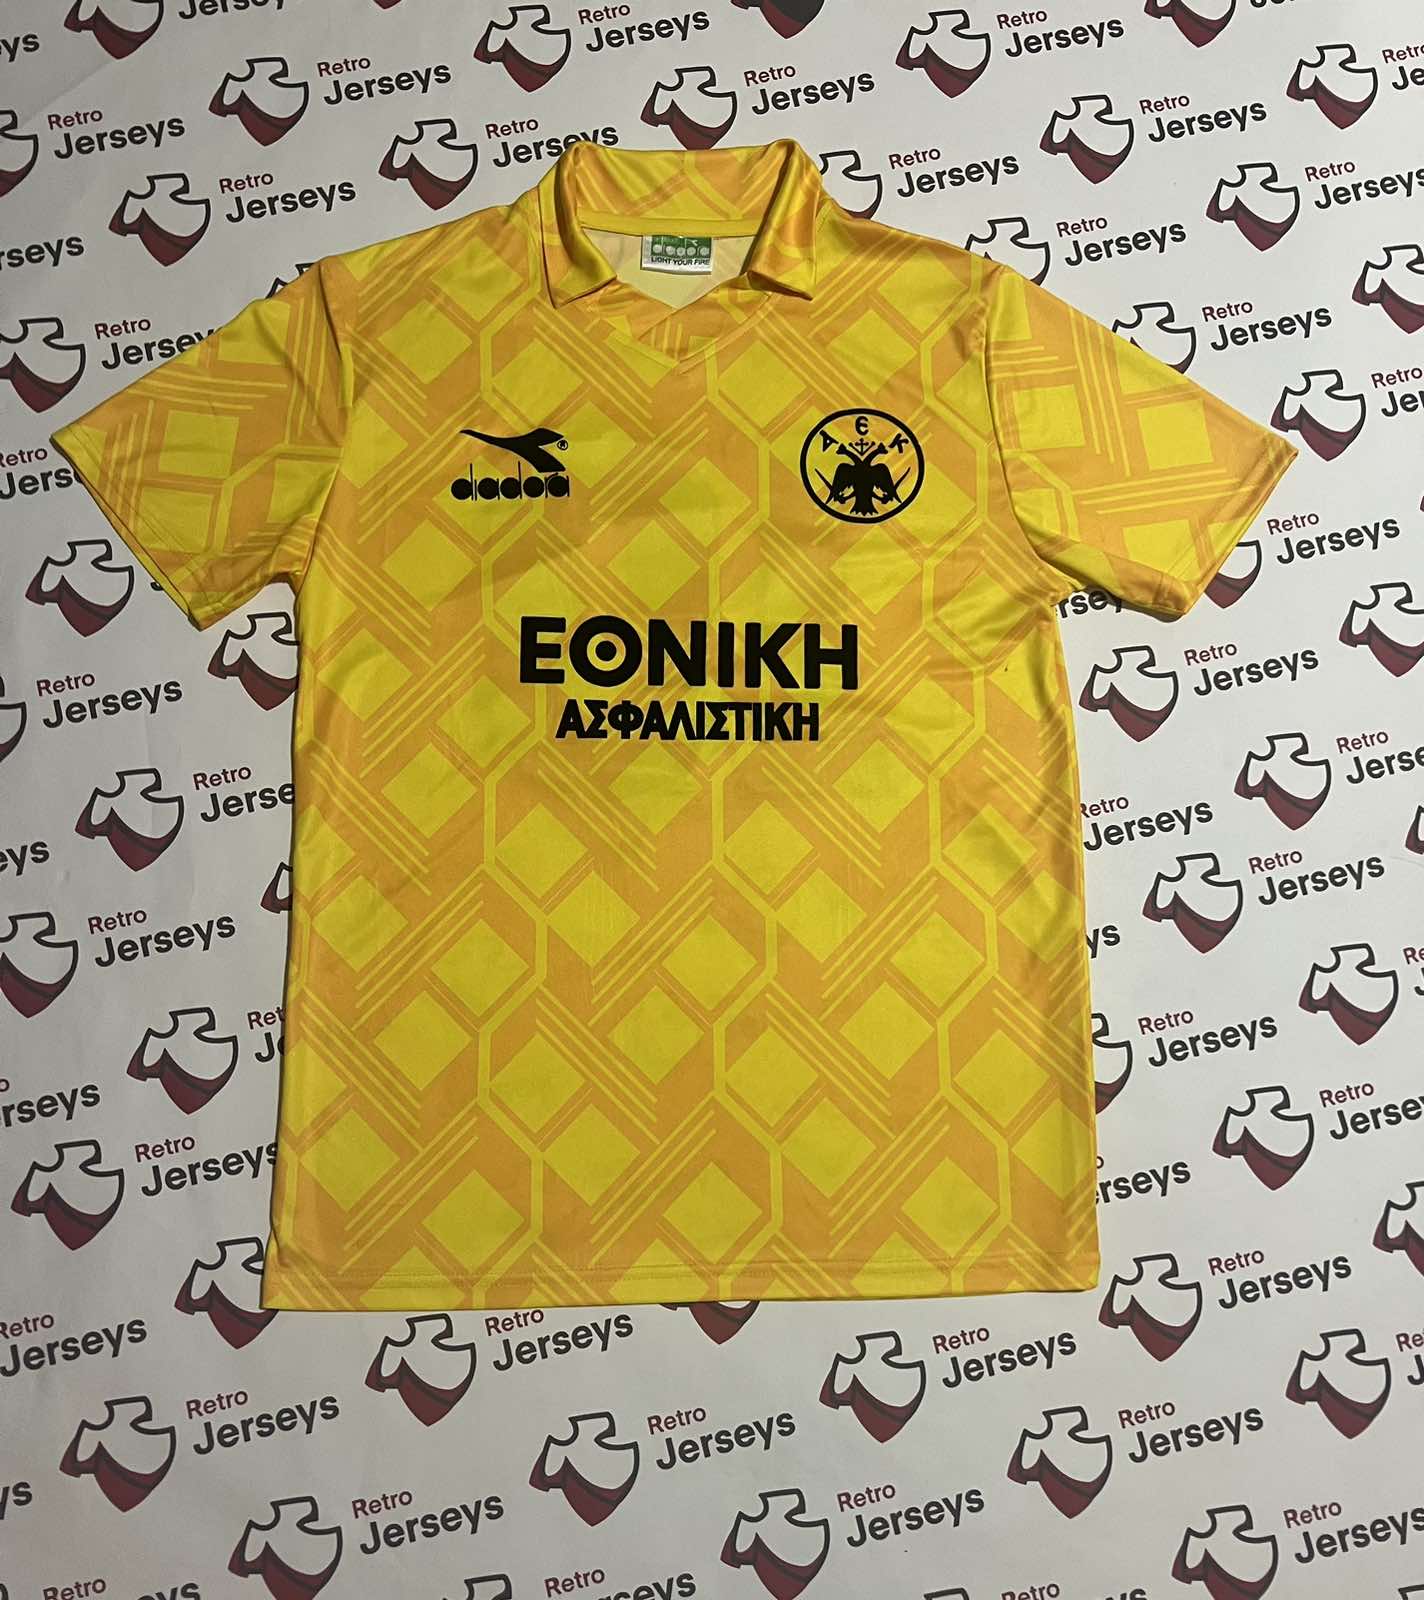 AEK Athens Shirt 1991-1992 Home - Retro Jersey, φανέλα αεκ - Retro Jerseys